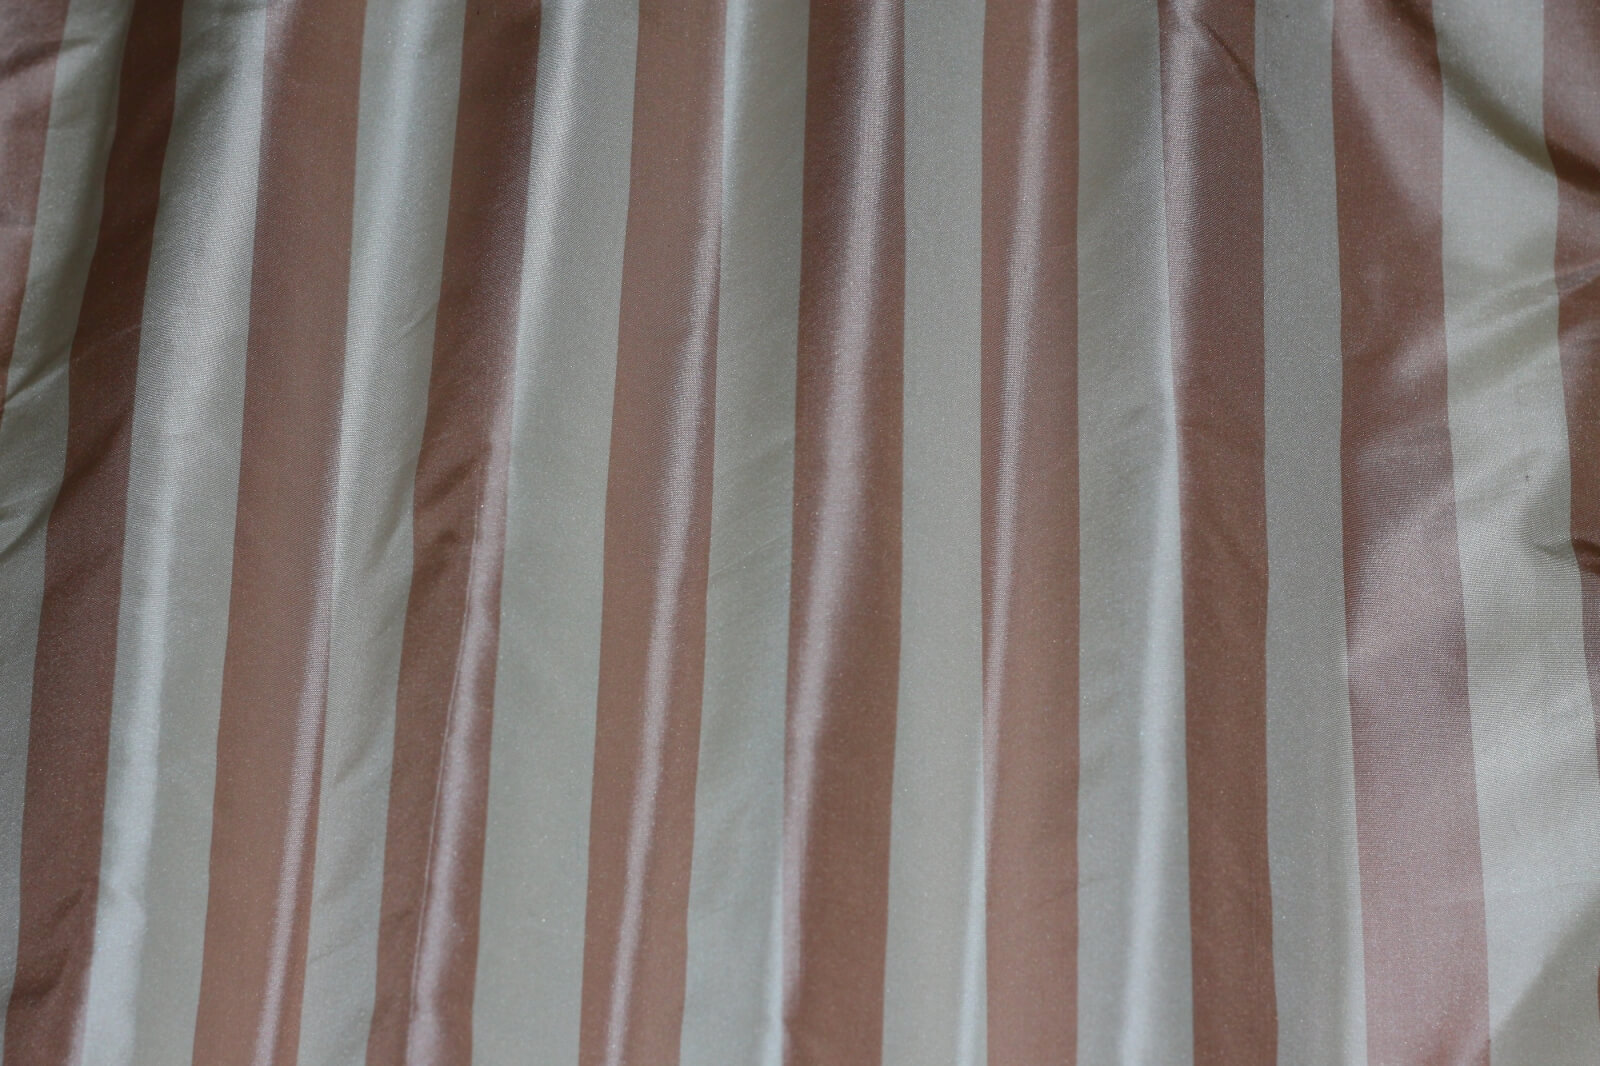 TS-7007: Baby Pink Silk Taffeta Fabric 100% Silk - Silks Unlimited